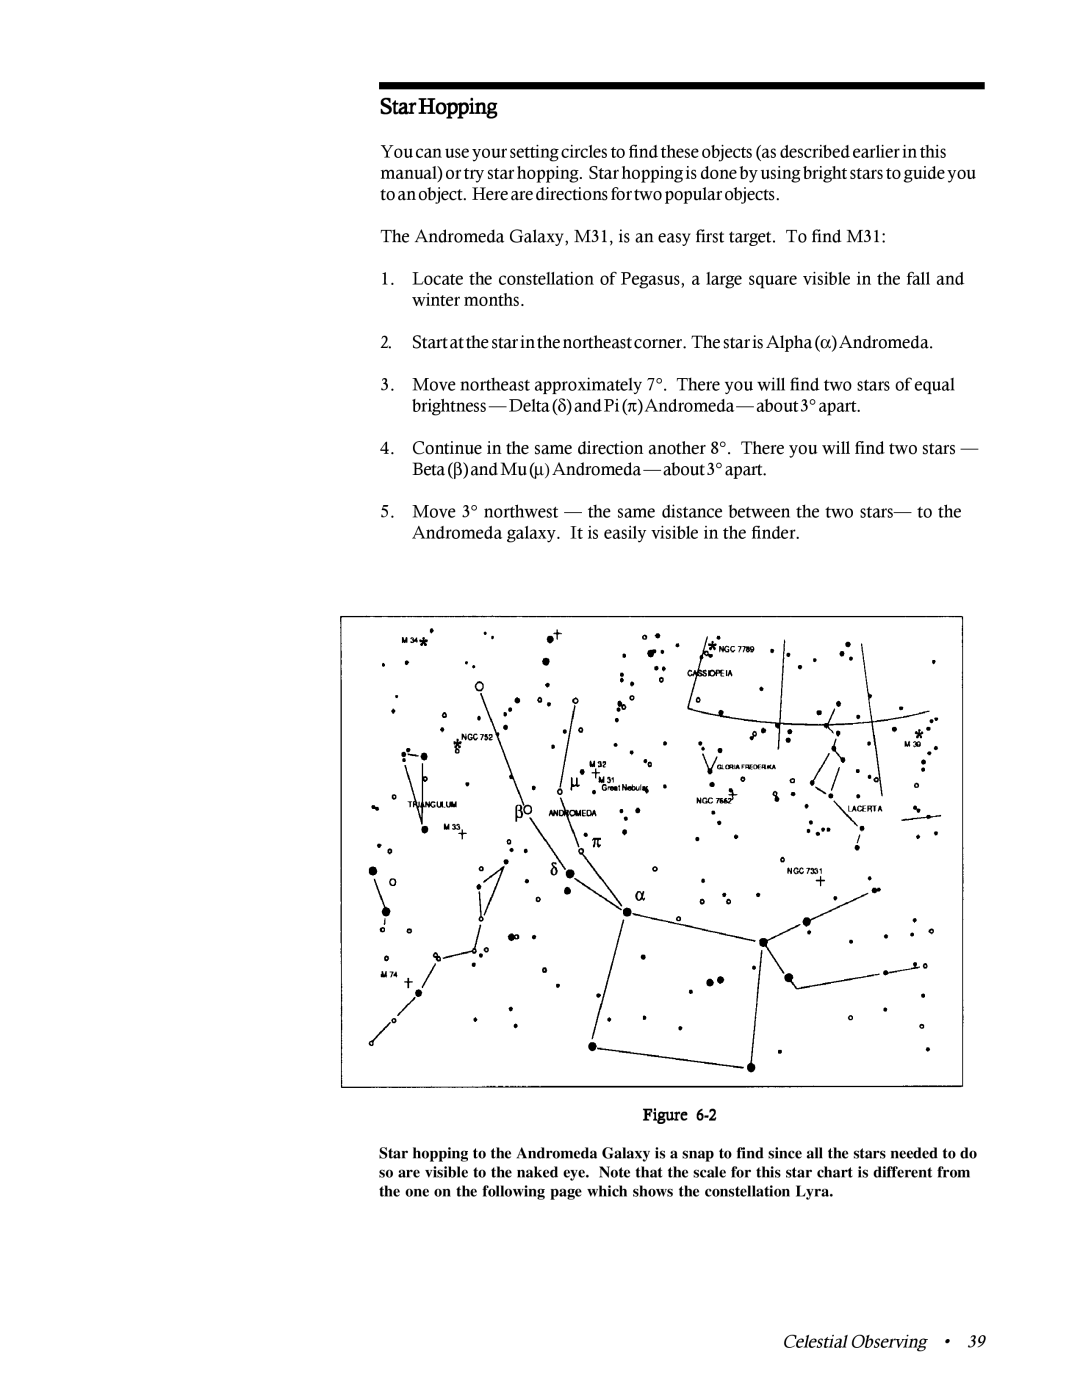 Celestron CR-150 HD instruction manual StarHopping, Celestial Observing 